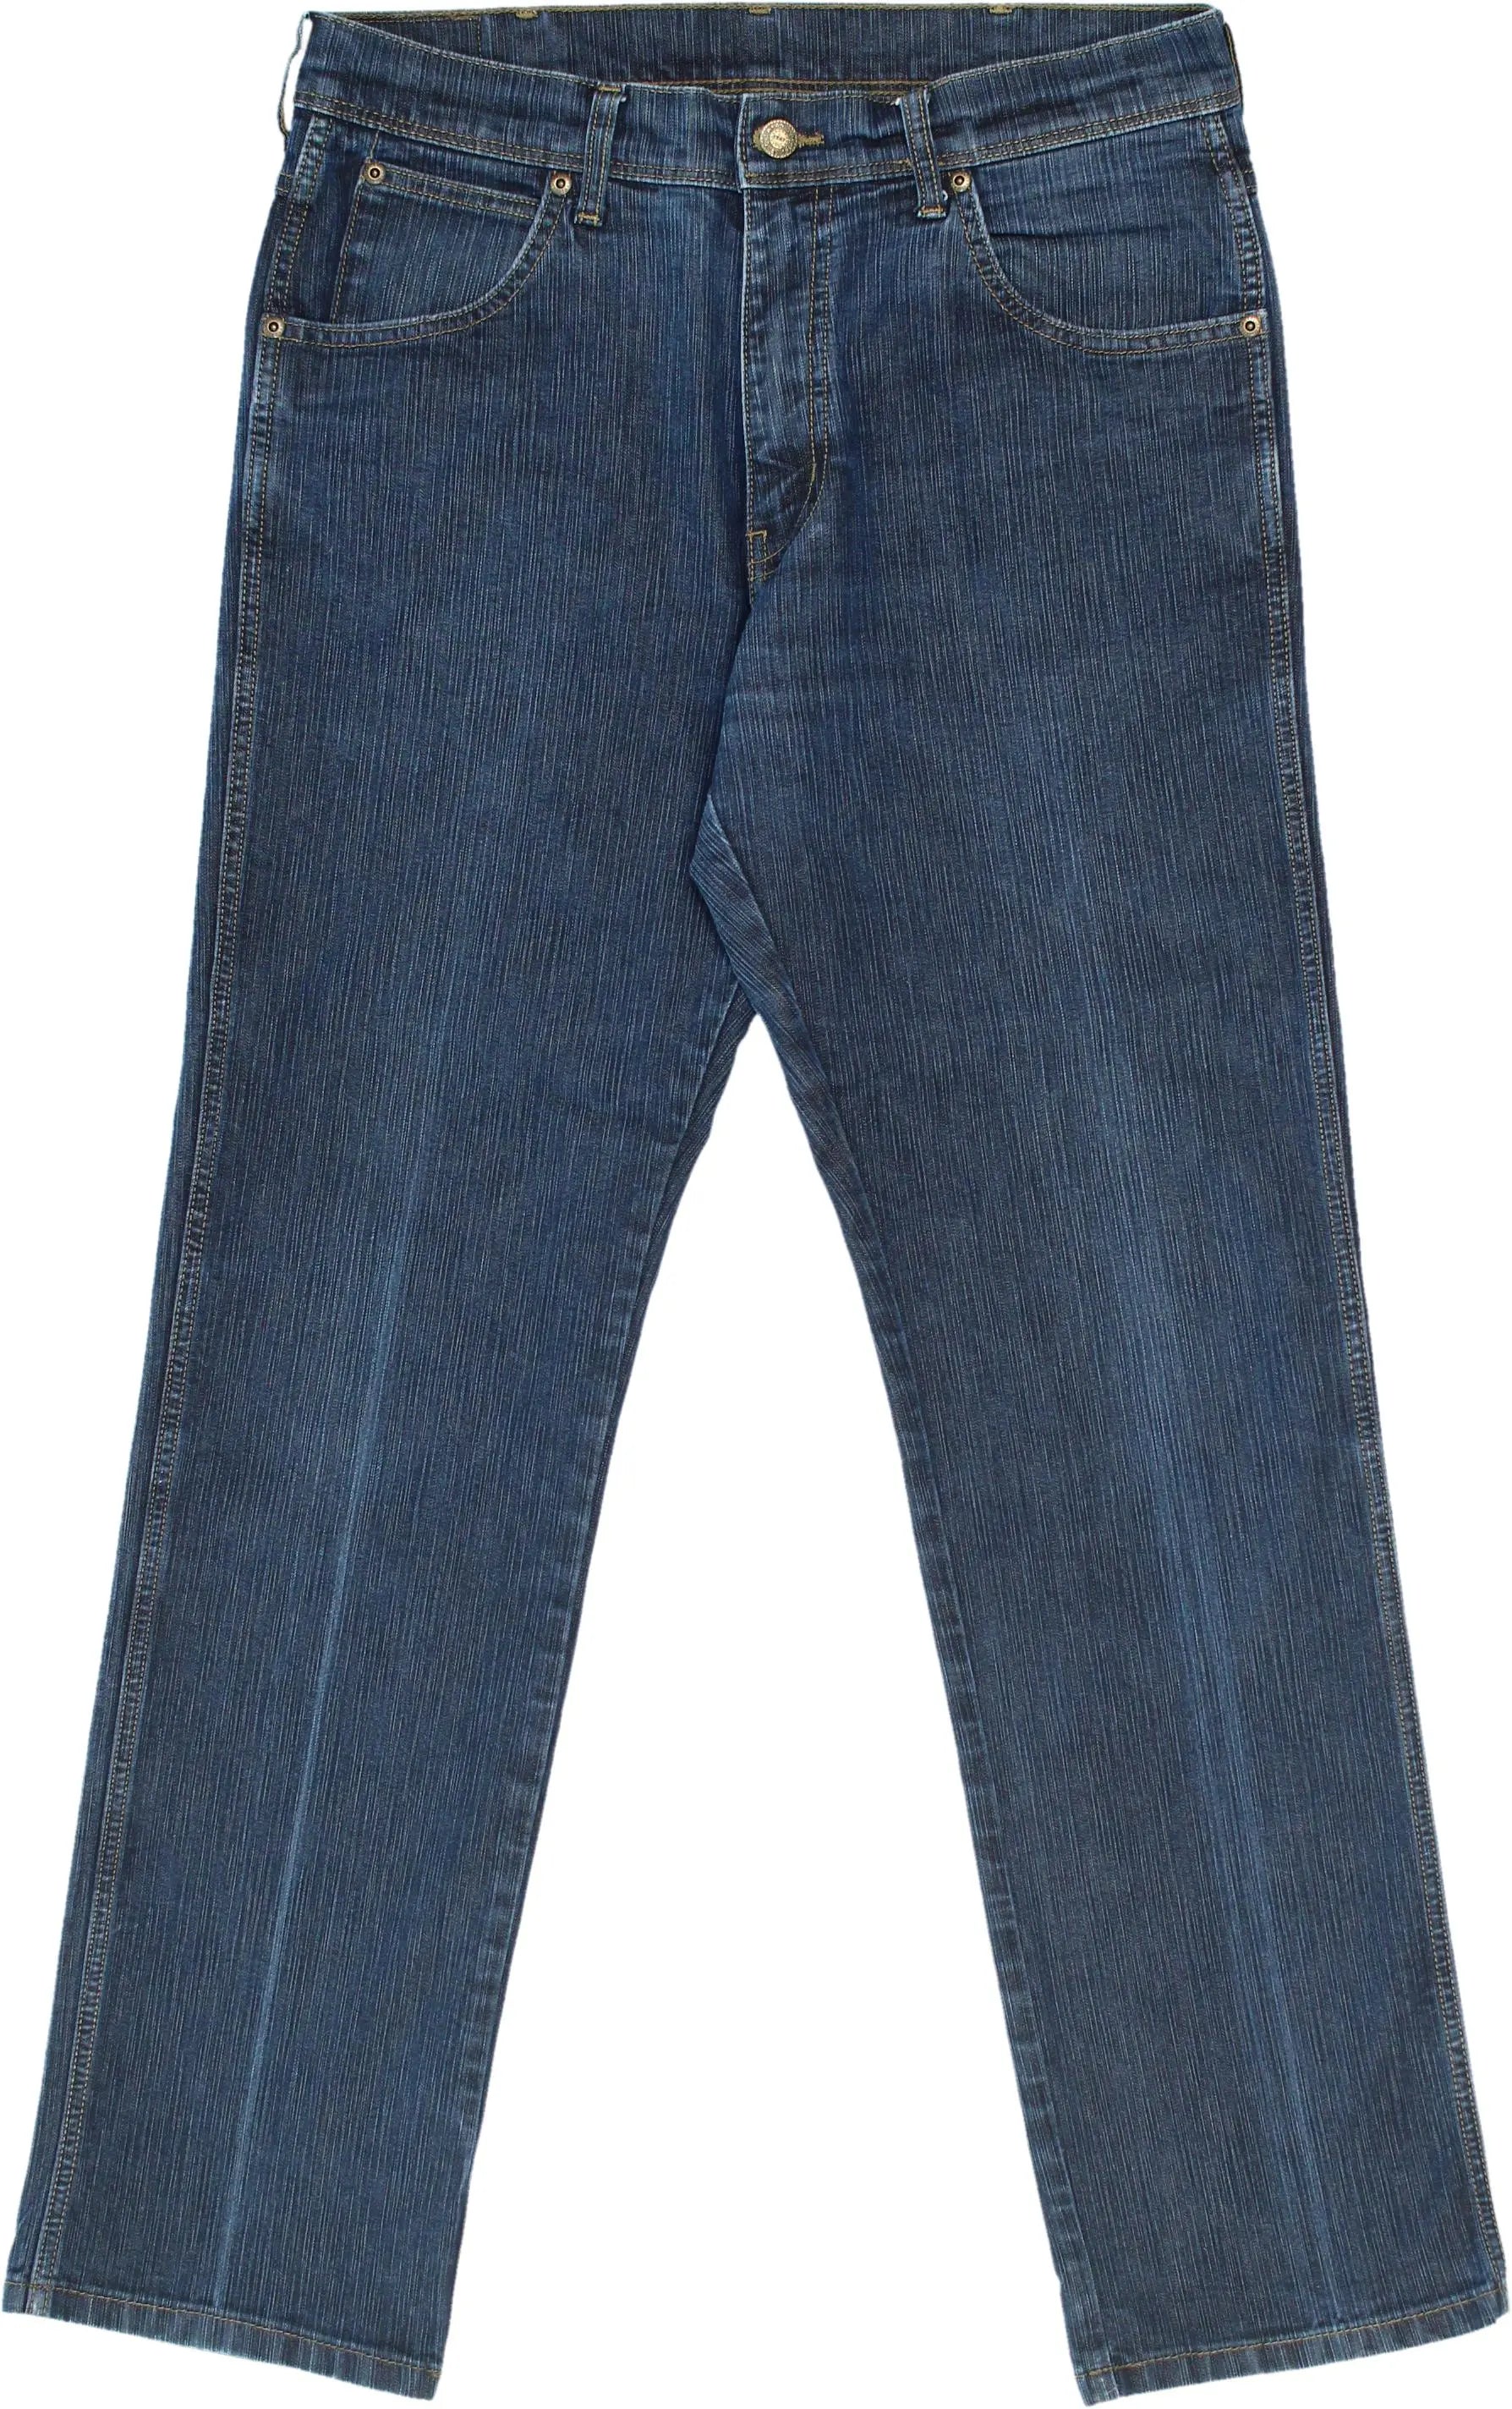 Wrangler - Wrangler Regular Fit Jeans- ThriftTale.com - Vintage and second handclothing